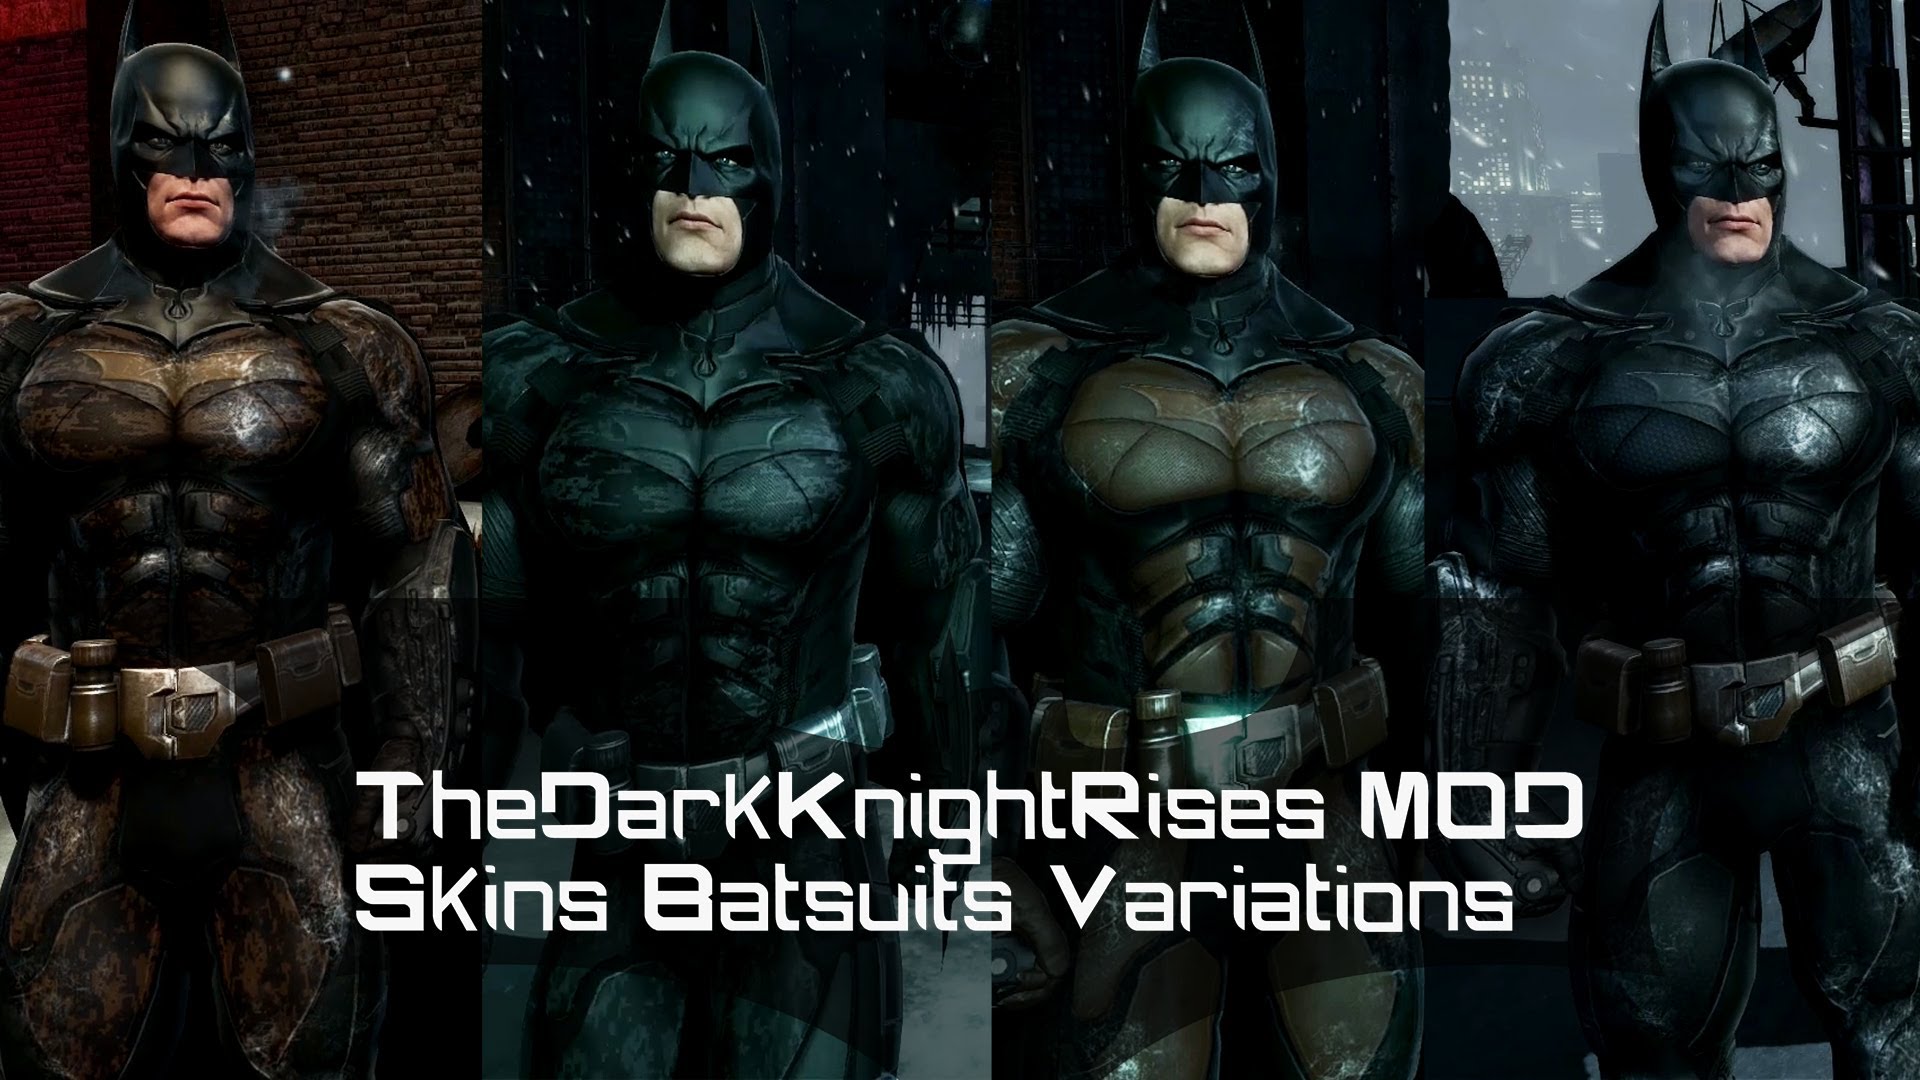 Batman origins mods. Batman Arkham Origins костюм тёмного рыцаря. Batman Arkham Origins Бэтмен - темный рыцарь. Бэтмен Аркхем ориджинс скин тёмный рыцарь. Бэткостюм тёмный рыцарь.